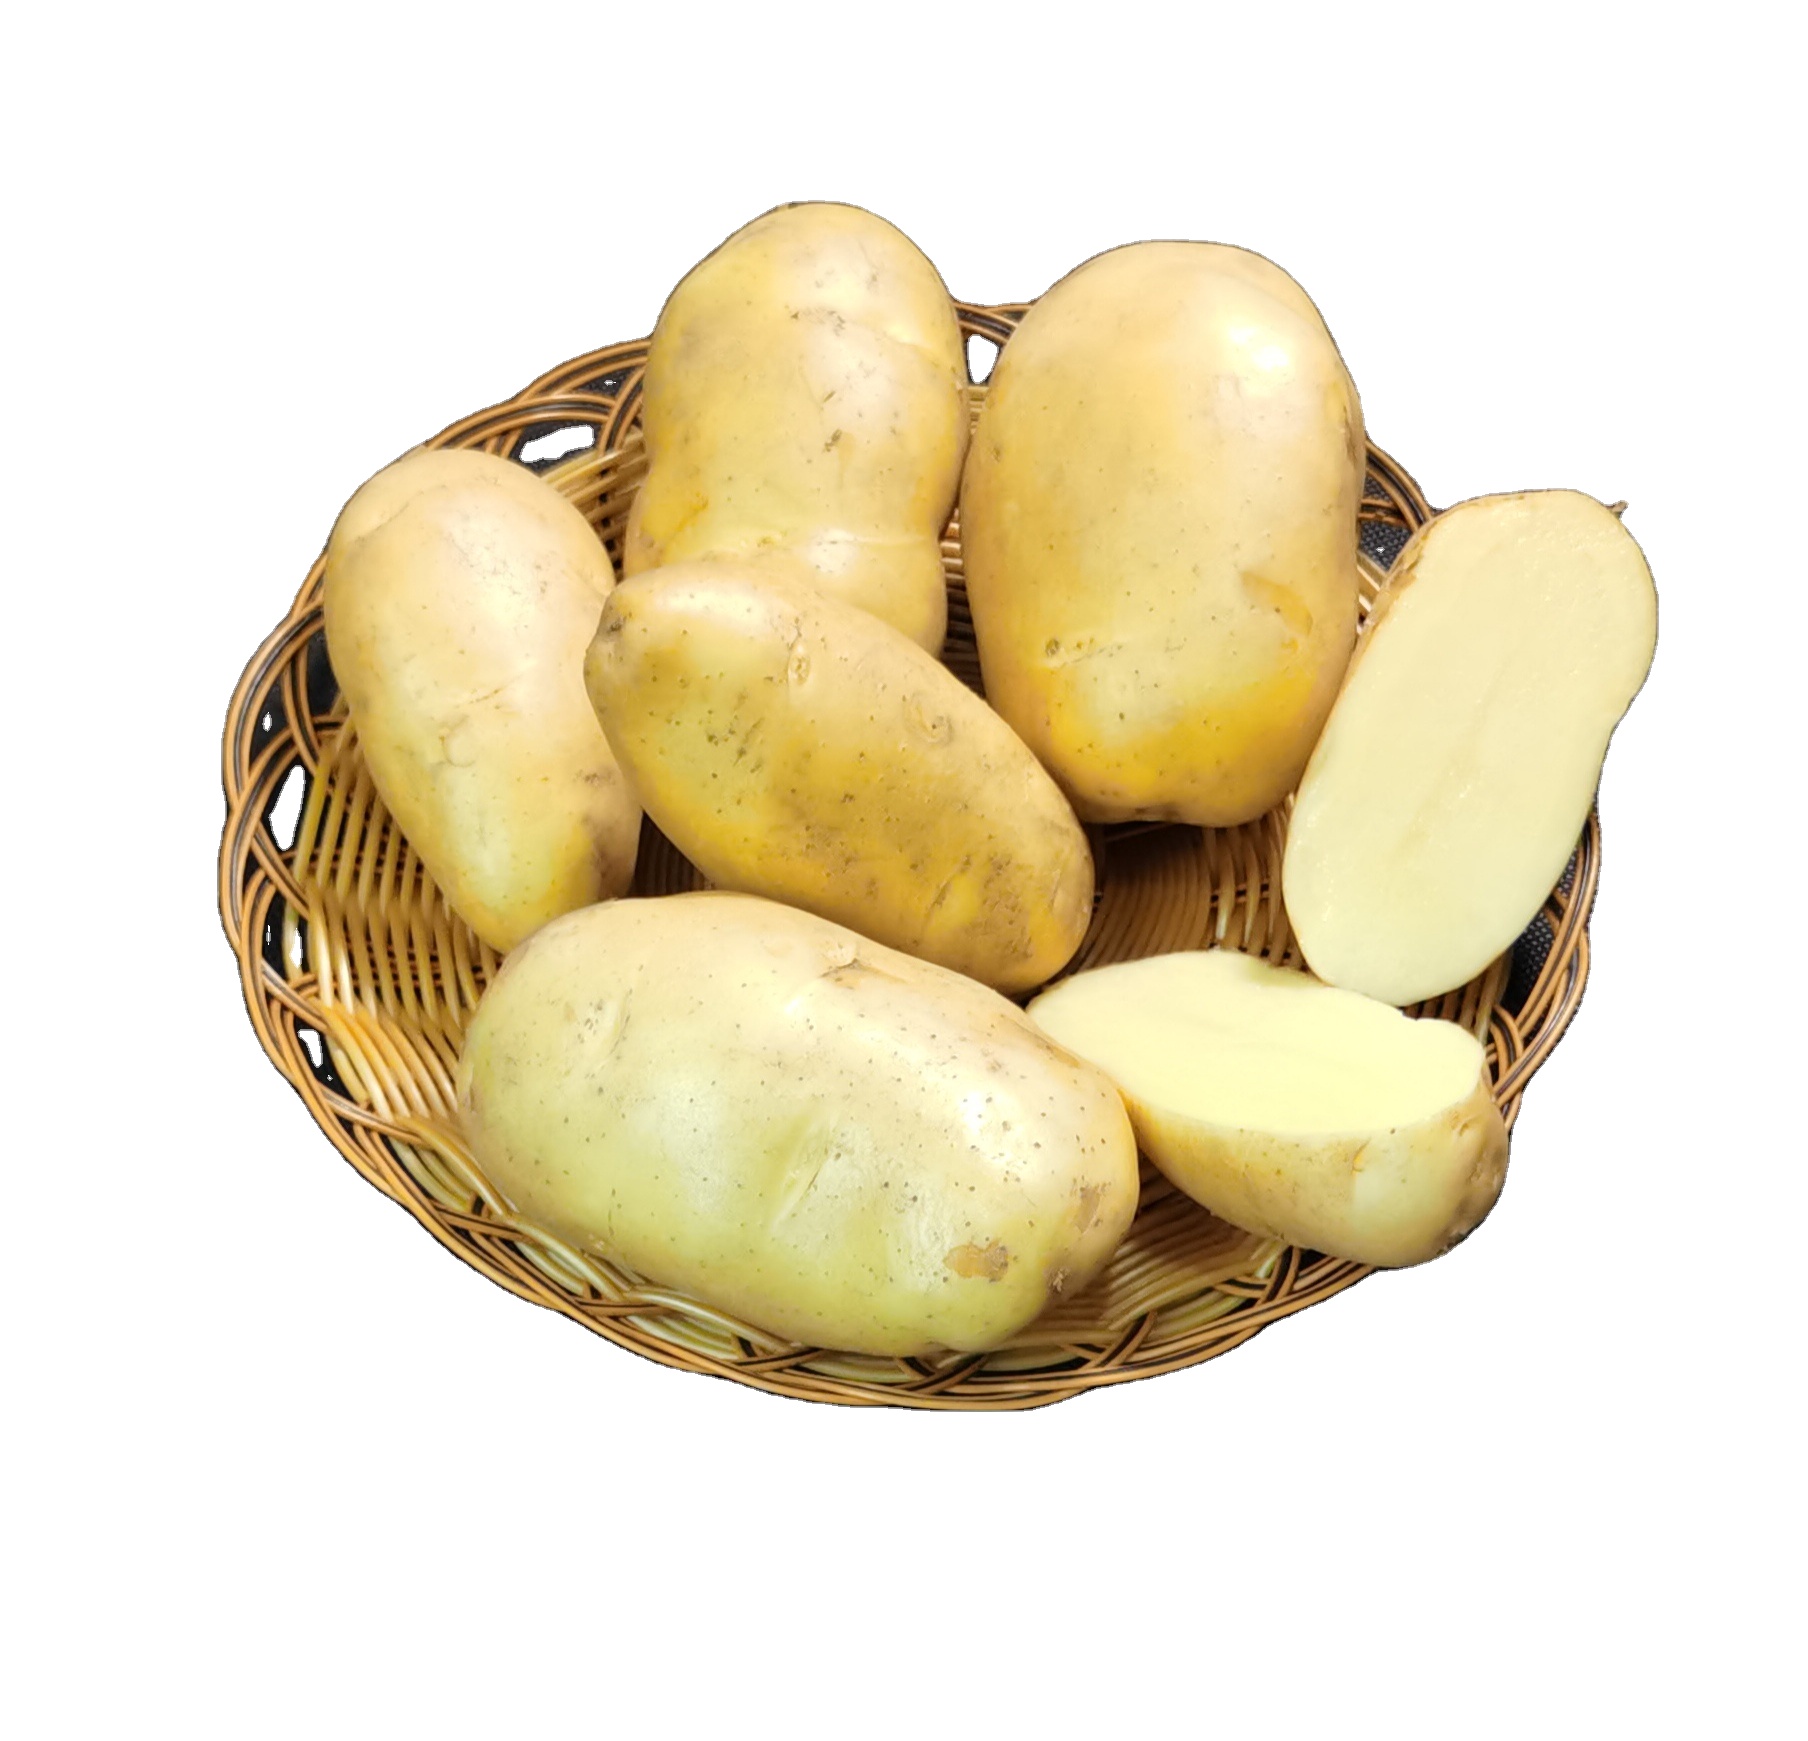 patate fresche pakistan patate fresche francia